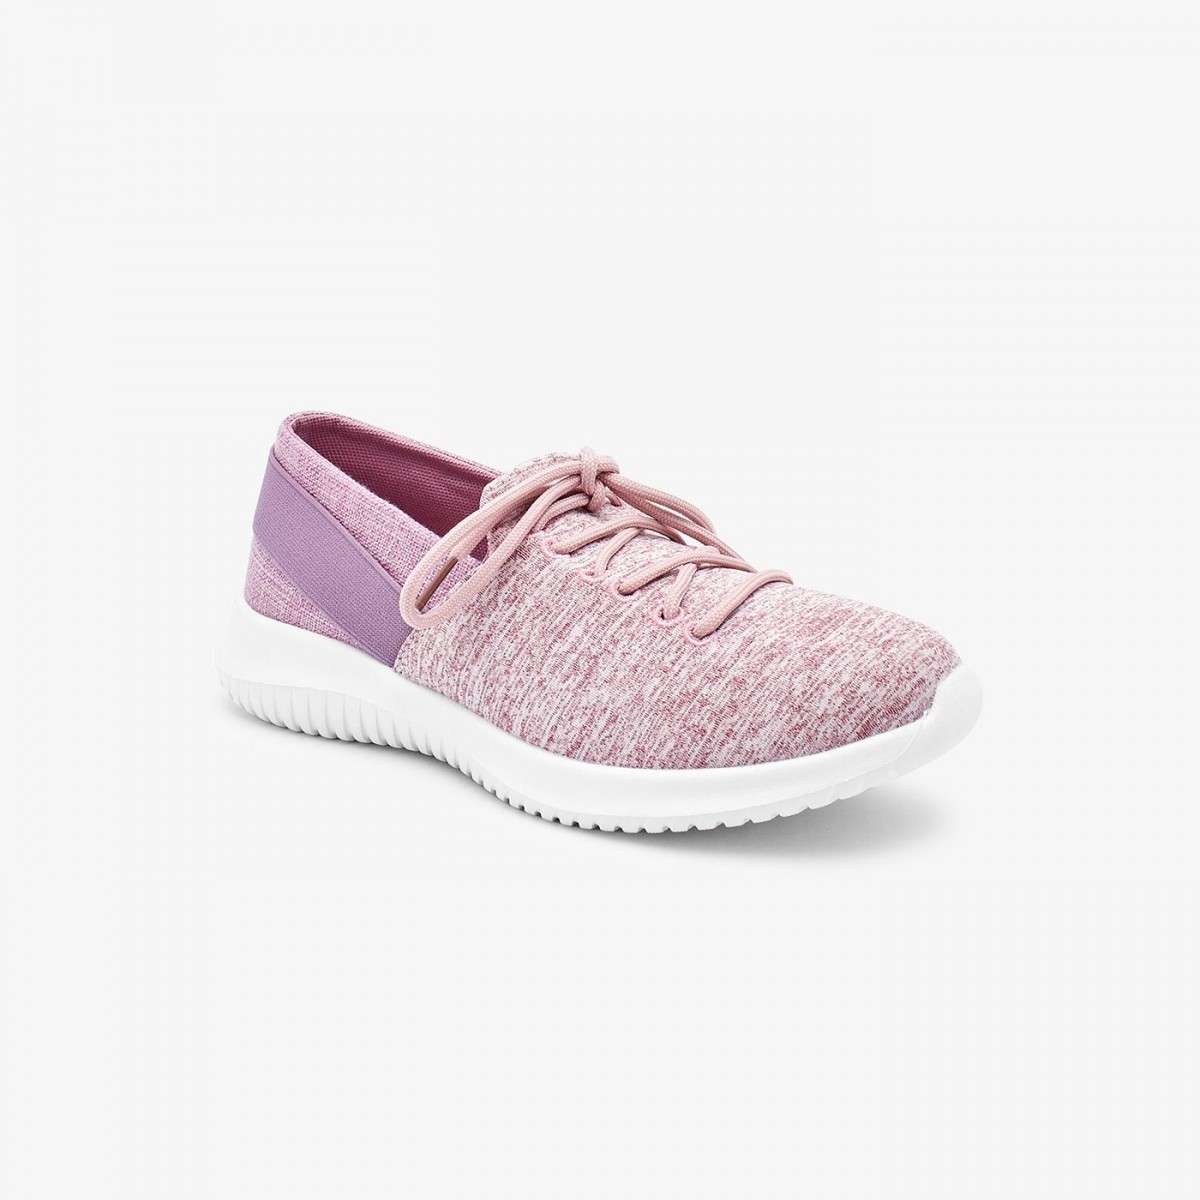 /2019/08/reeva-women-textured-sneakers-rv-sm-0450-purple-image1.jpeg